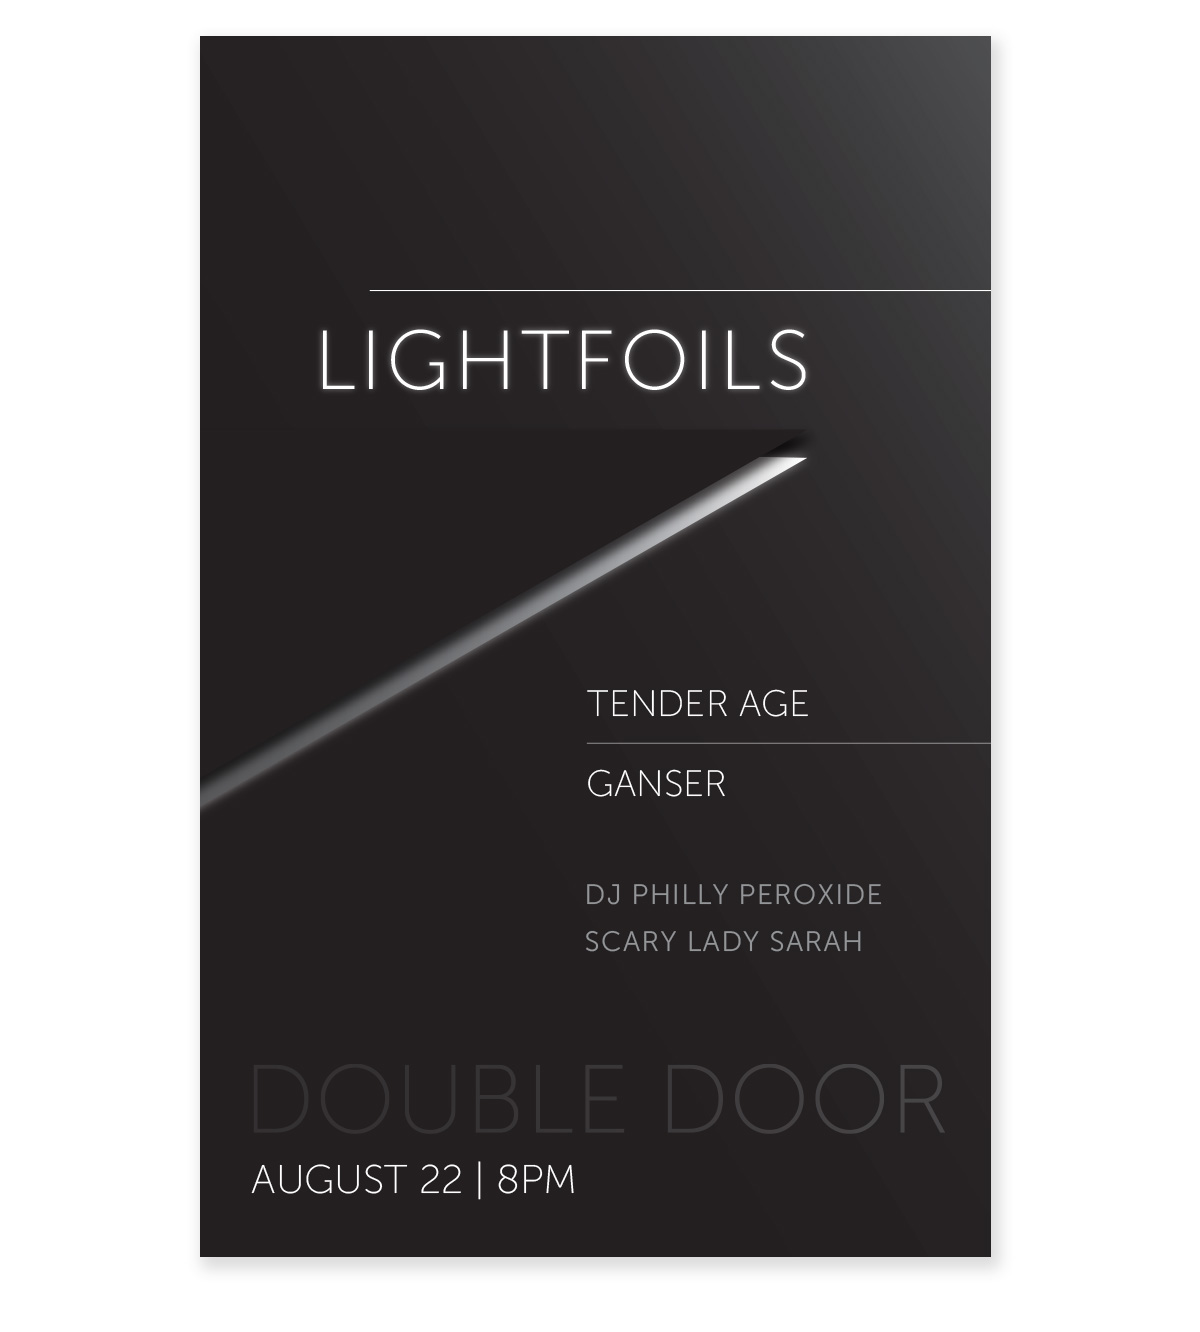 lightfoils band poster